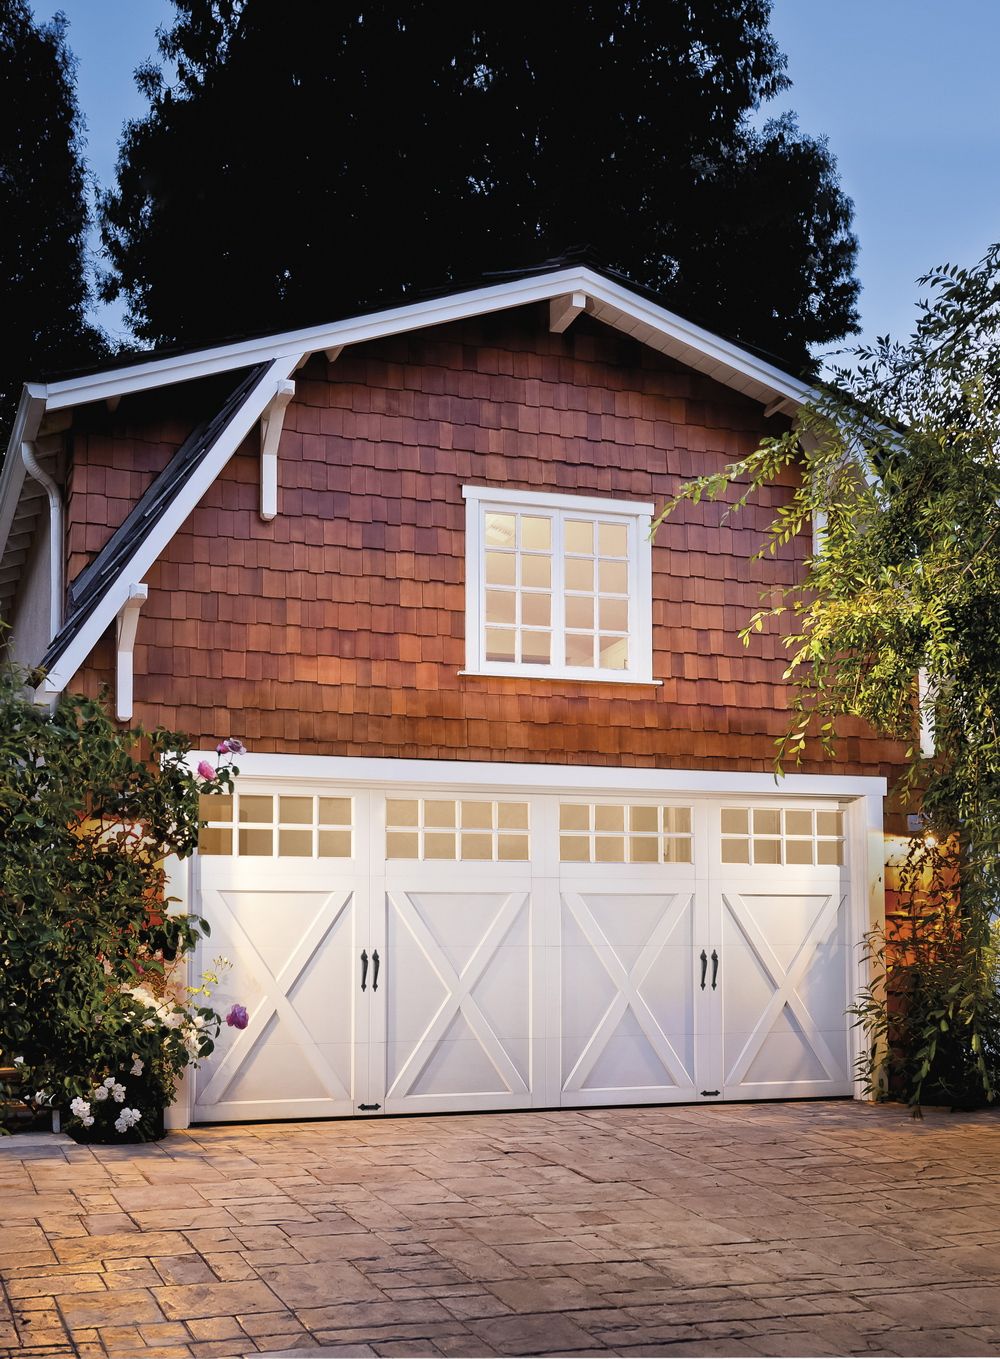  Clopay Garage Door Colors Sherwin Williams for Modern Garage